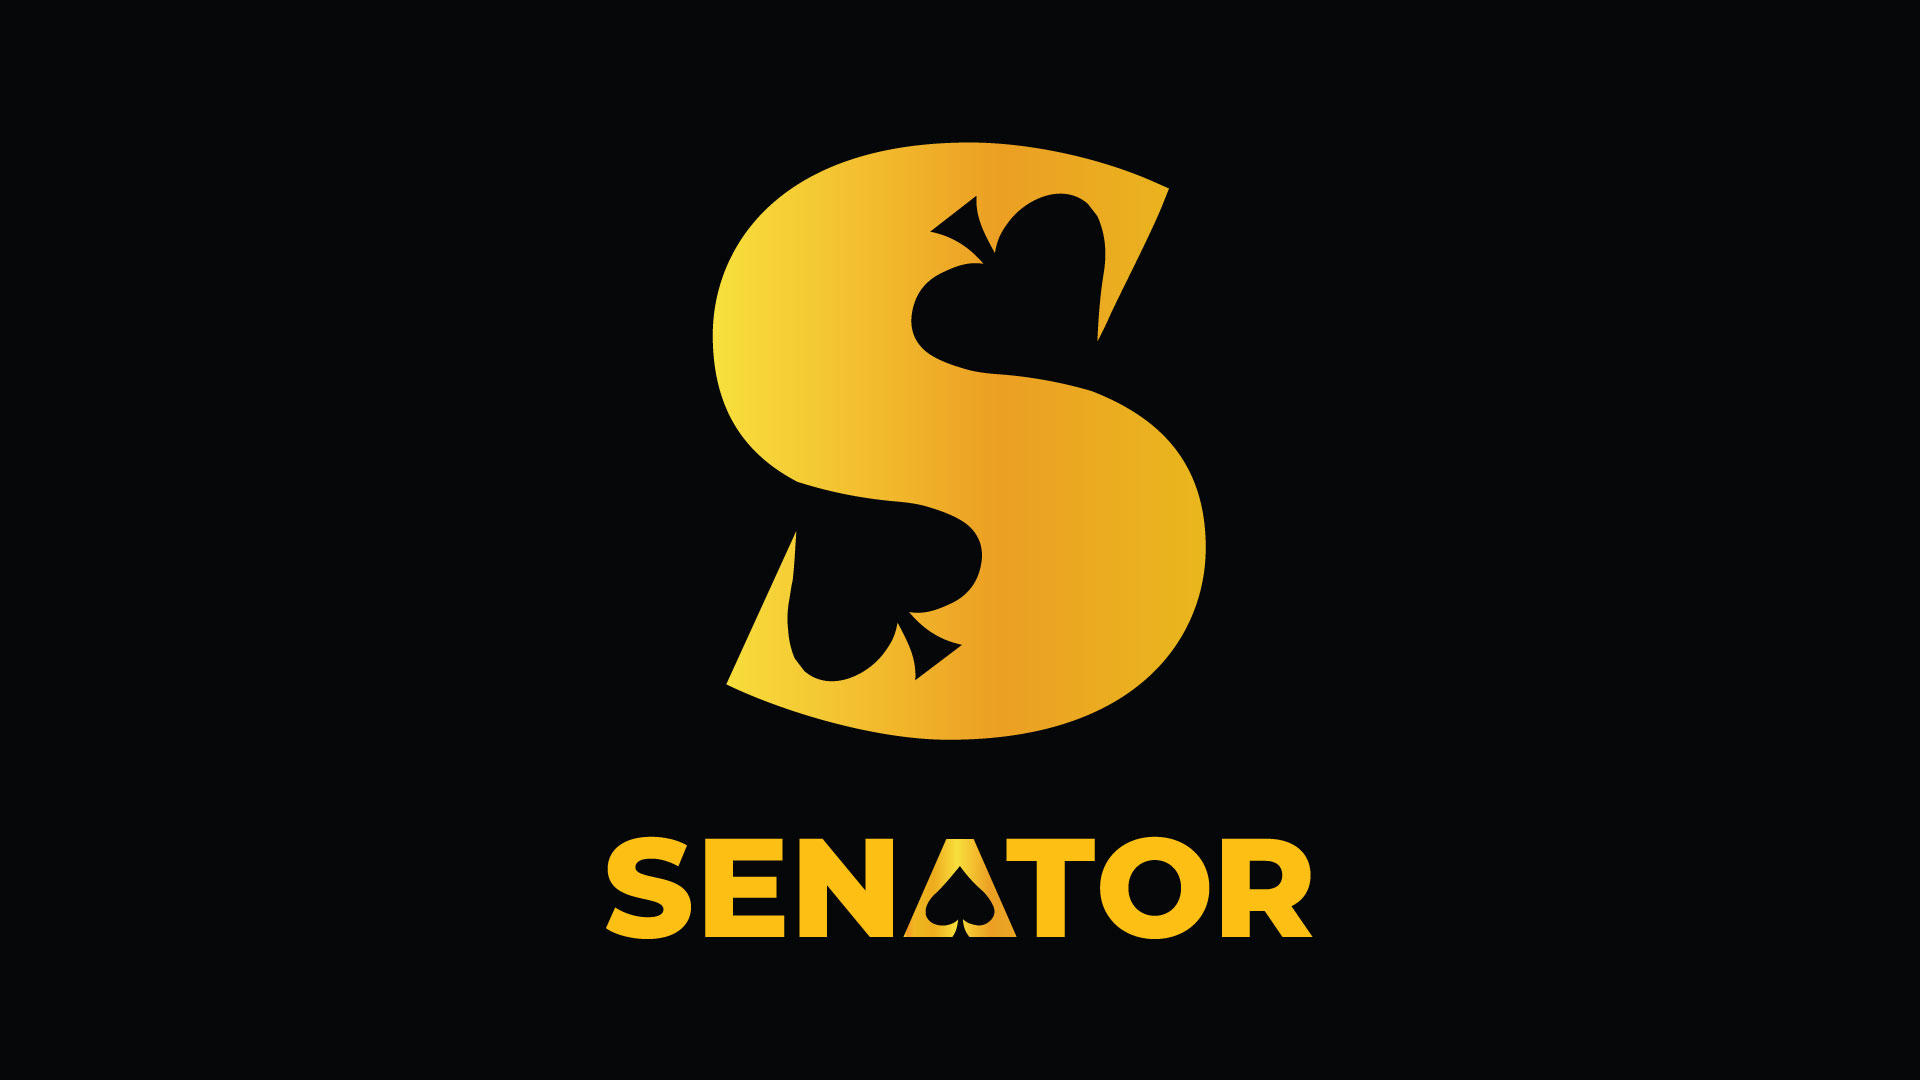 /posao/logo/senator logo.jpg